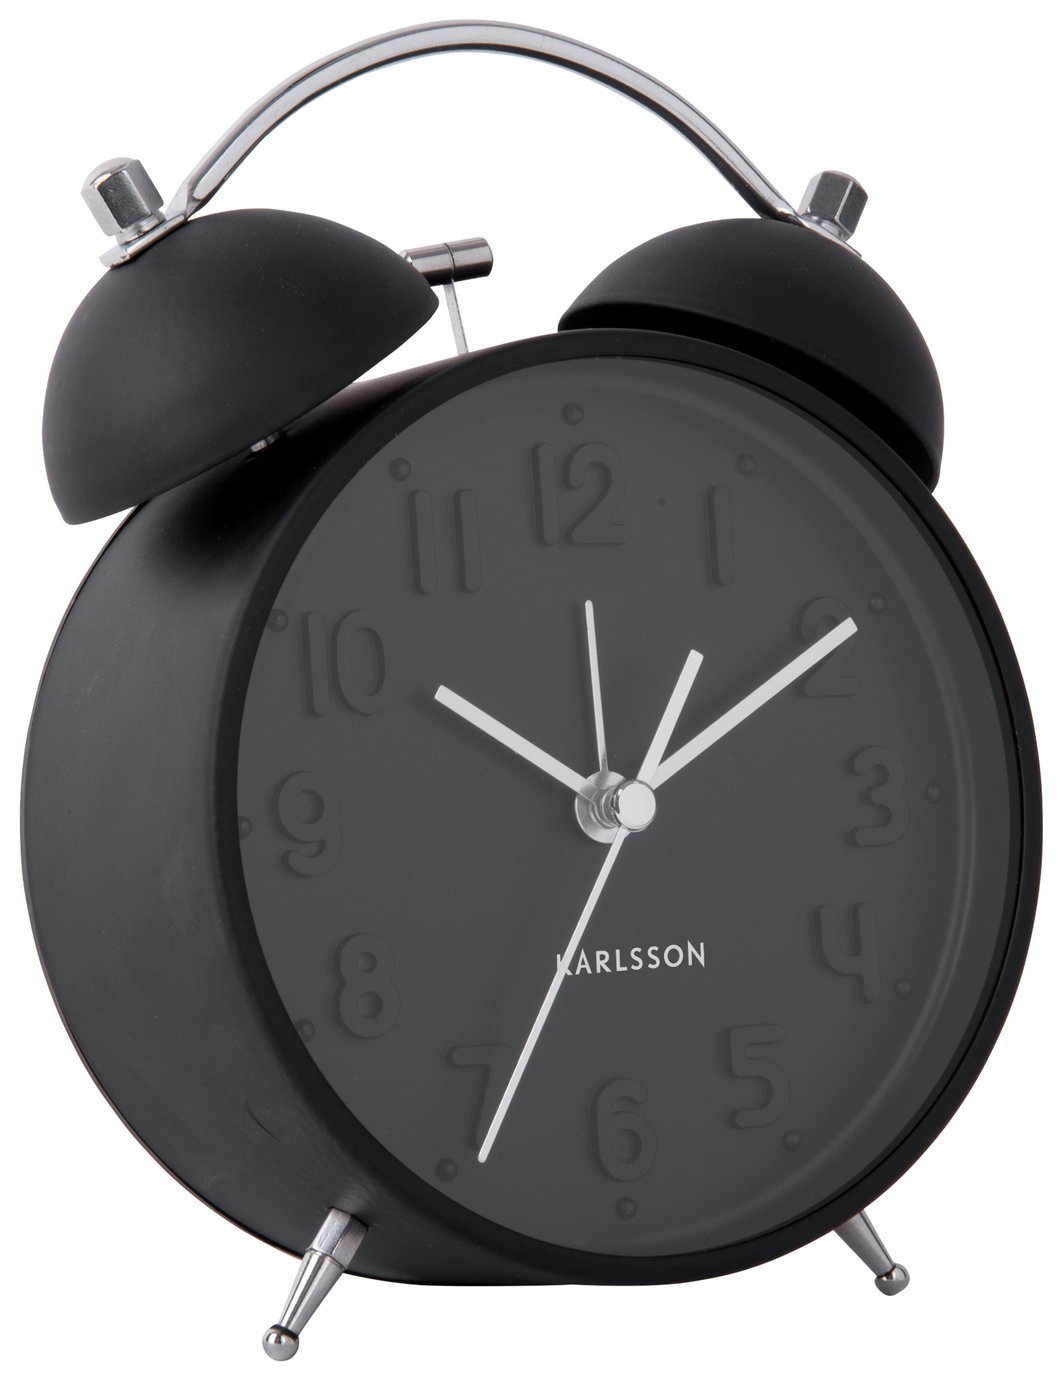 Karlsson Iconic Analogue Alarm Clock - Black 